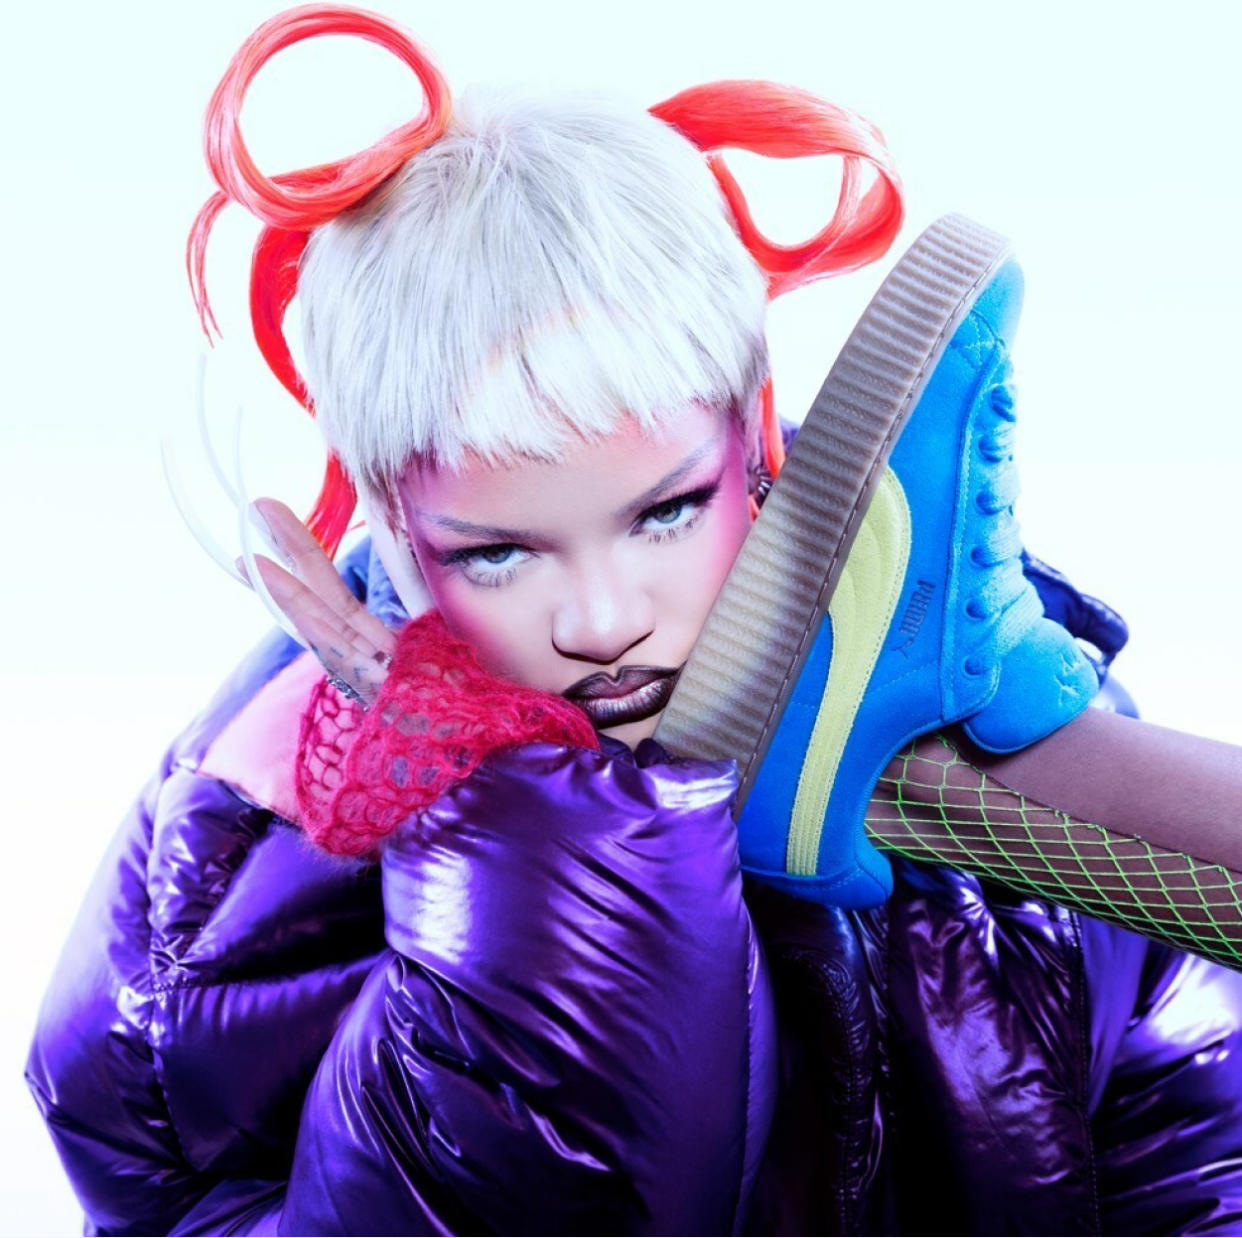  Rihanna in FENTY x PUMA Phatty Creeper sneakers. 